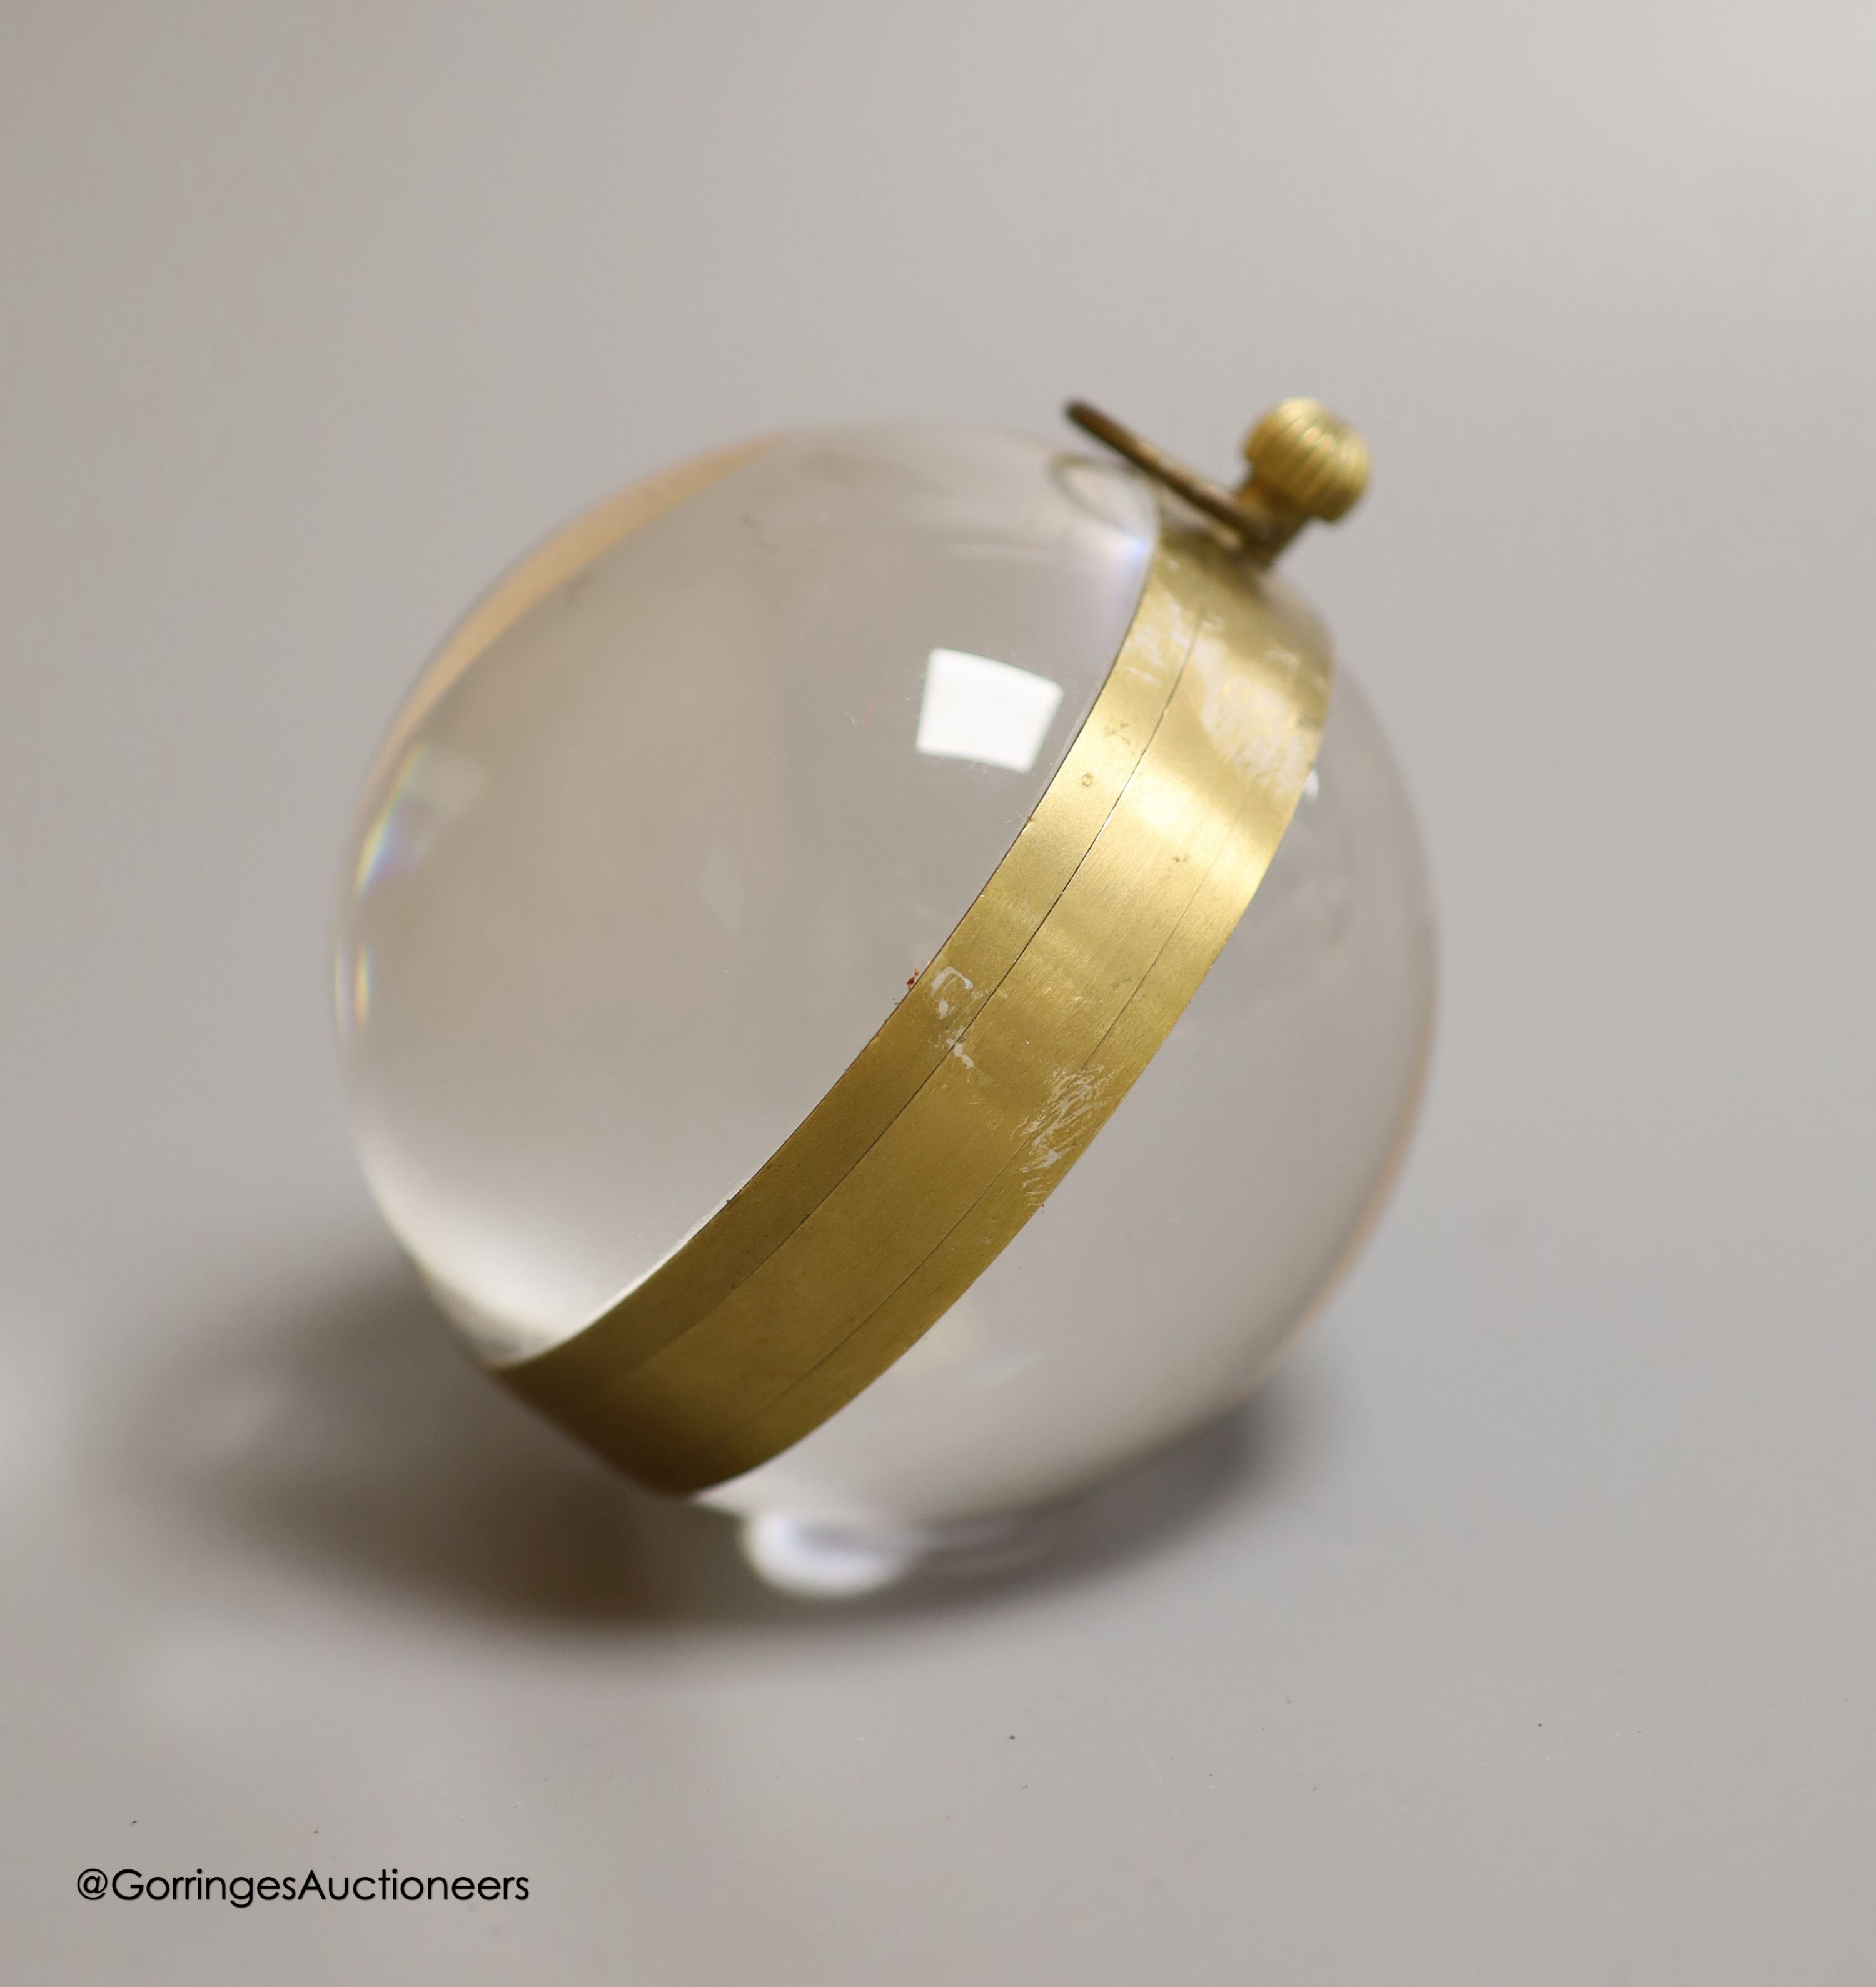 A spherical glass bullseye timepiece